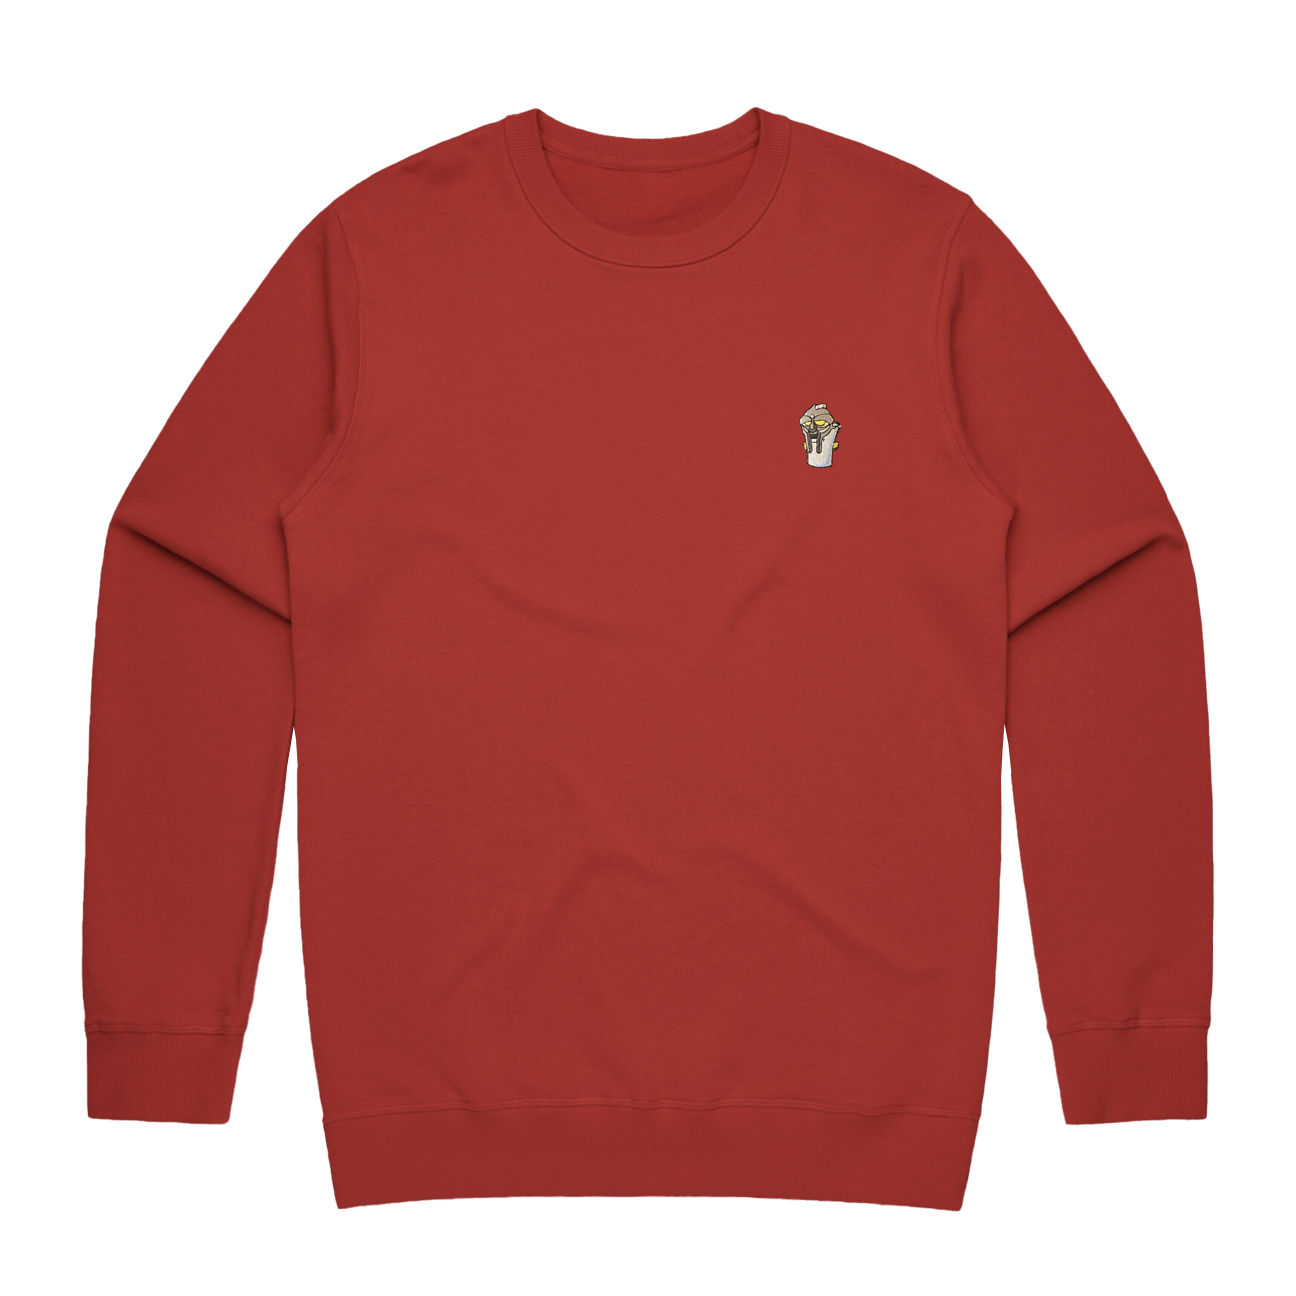 FER22 — Embroidery Crewneck Sweatshirt